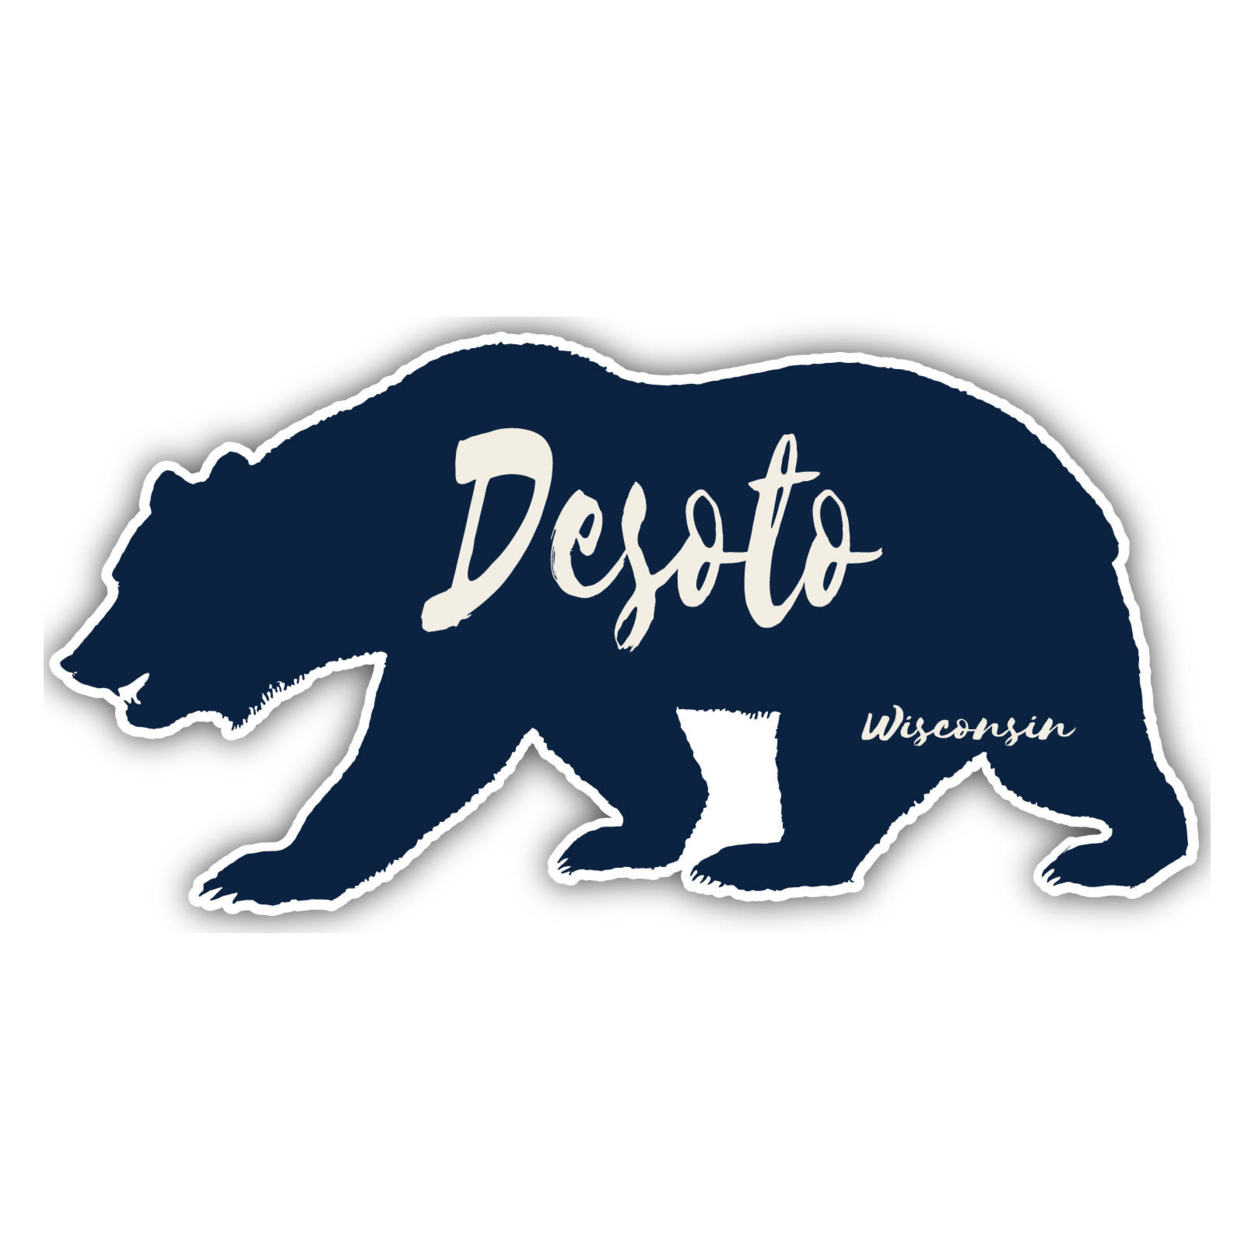 DeSoto Wisconsin Souvenir Decorative Stickers (Choose Theme And Size) - Single Unit, 8-Inch, Bear